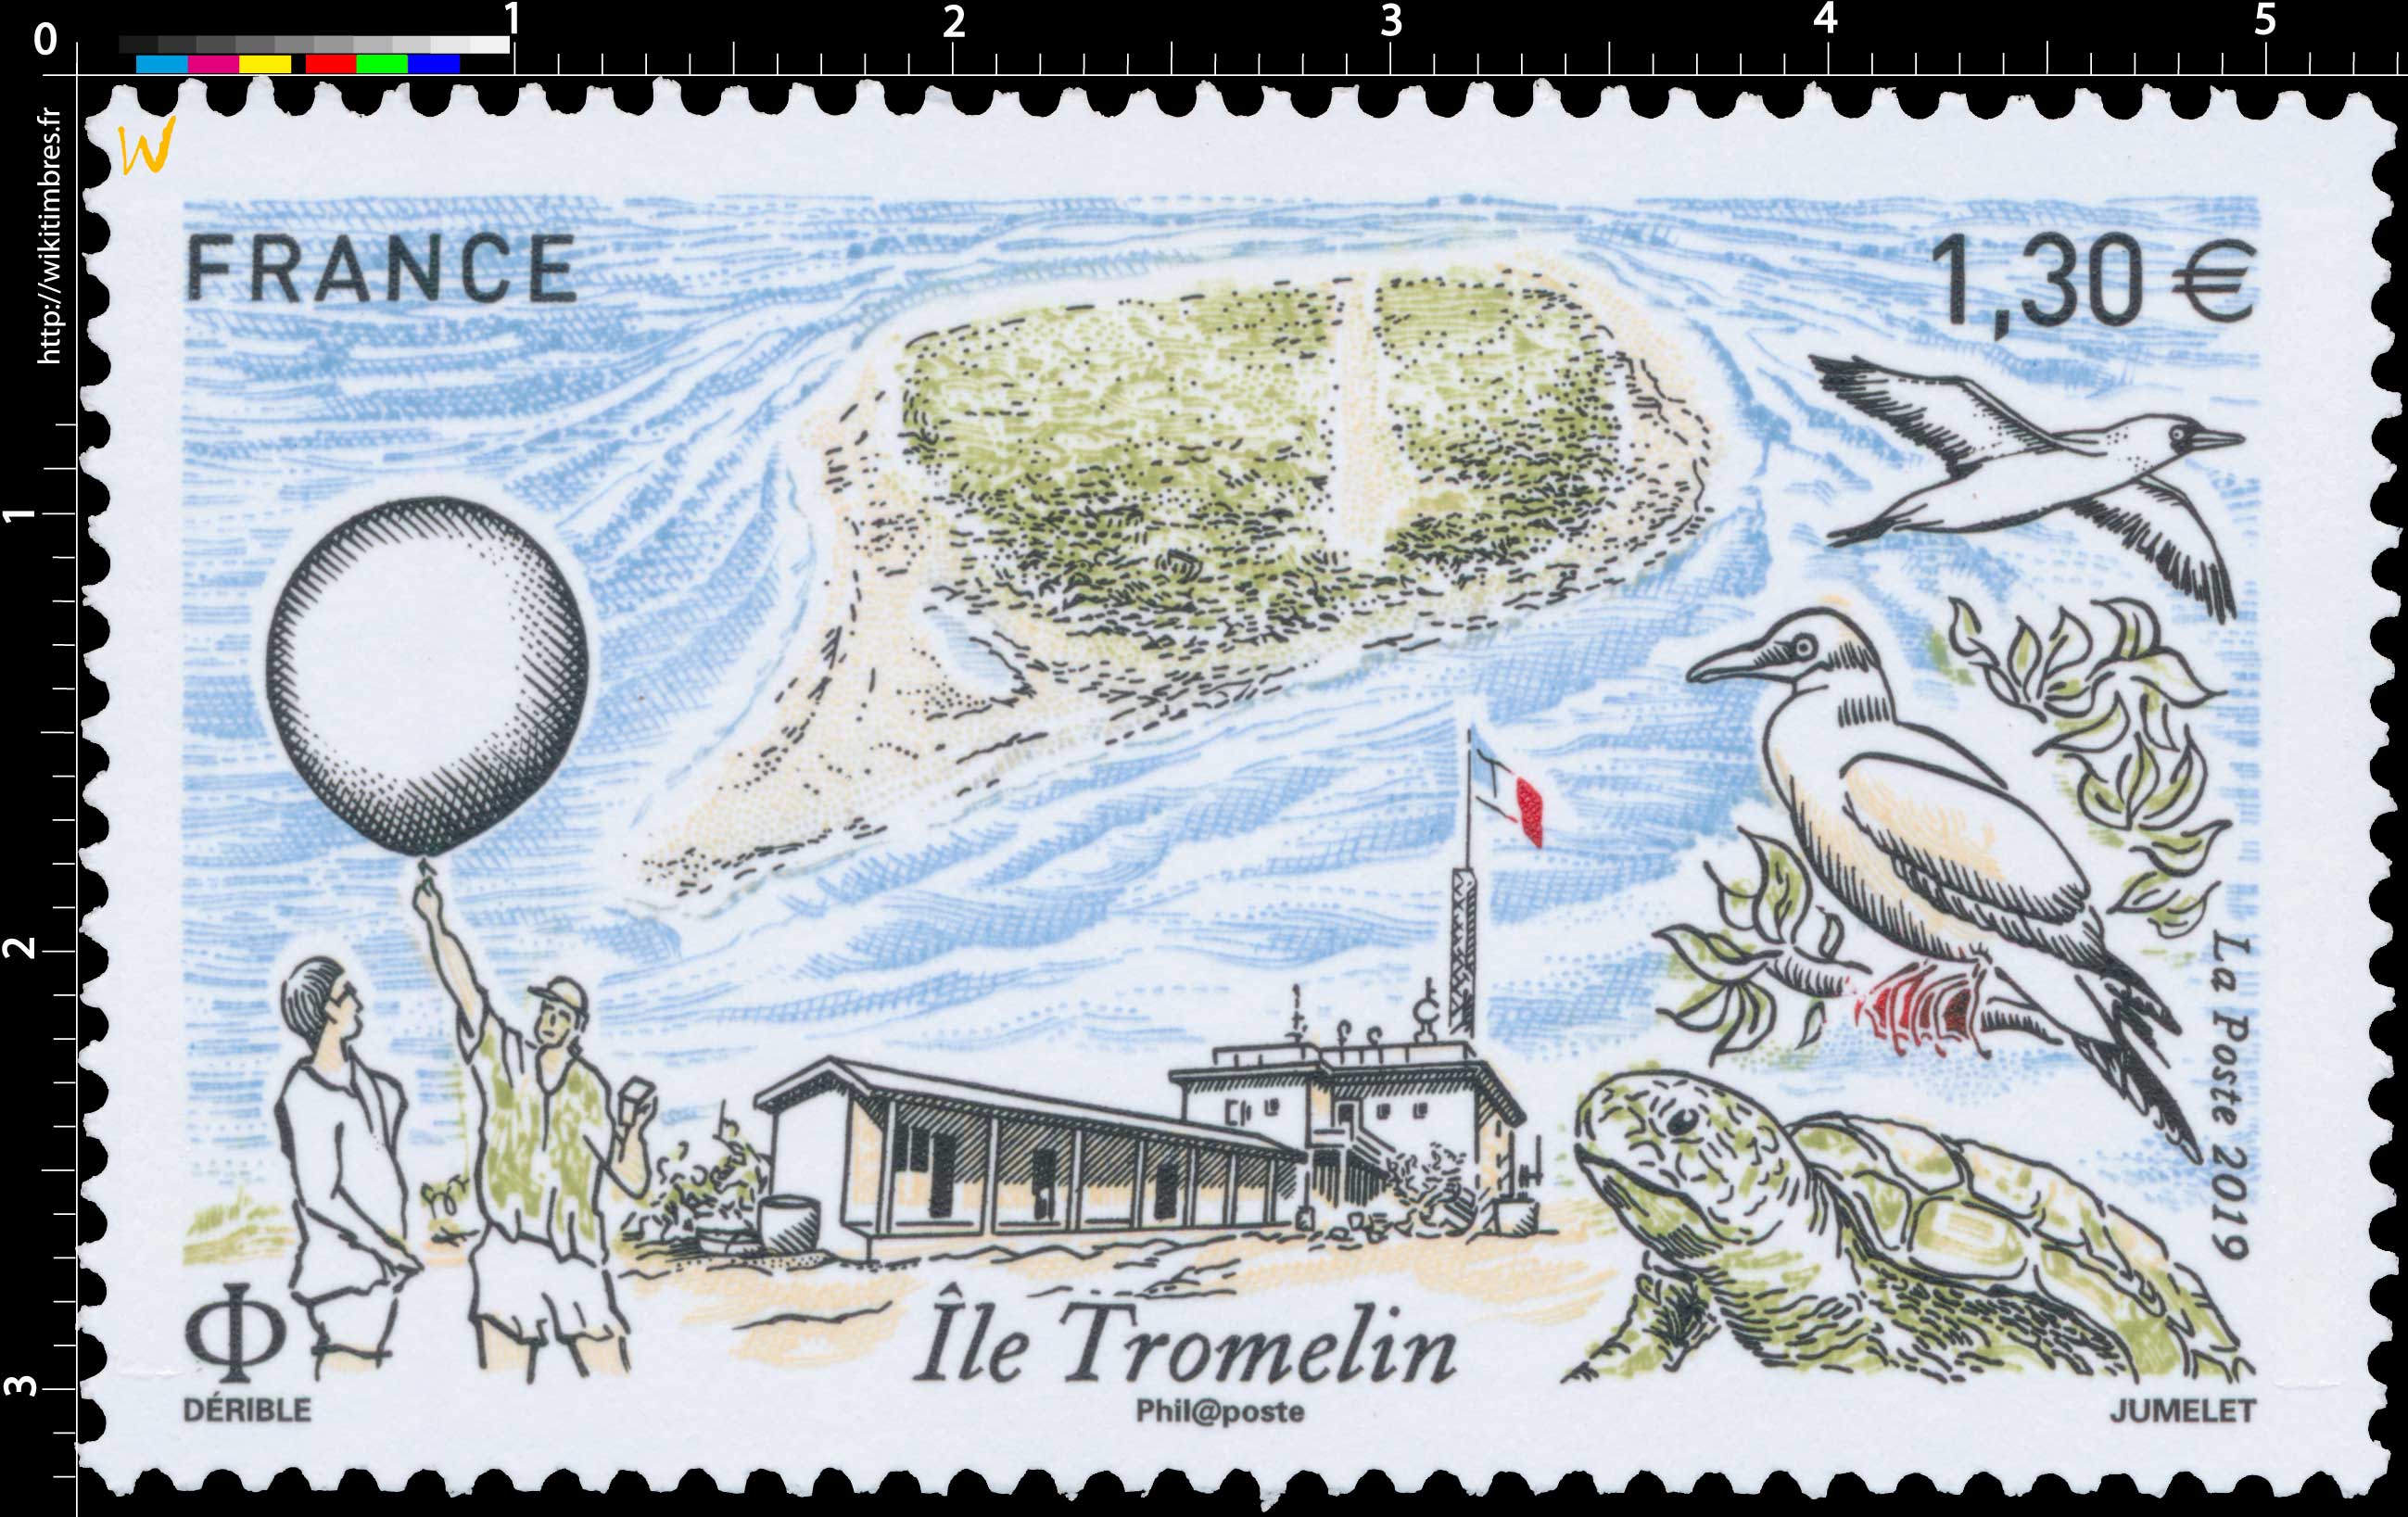 2019 Île Tromelin